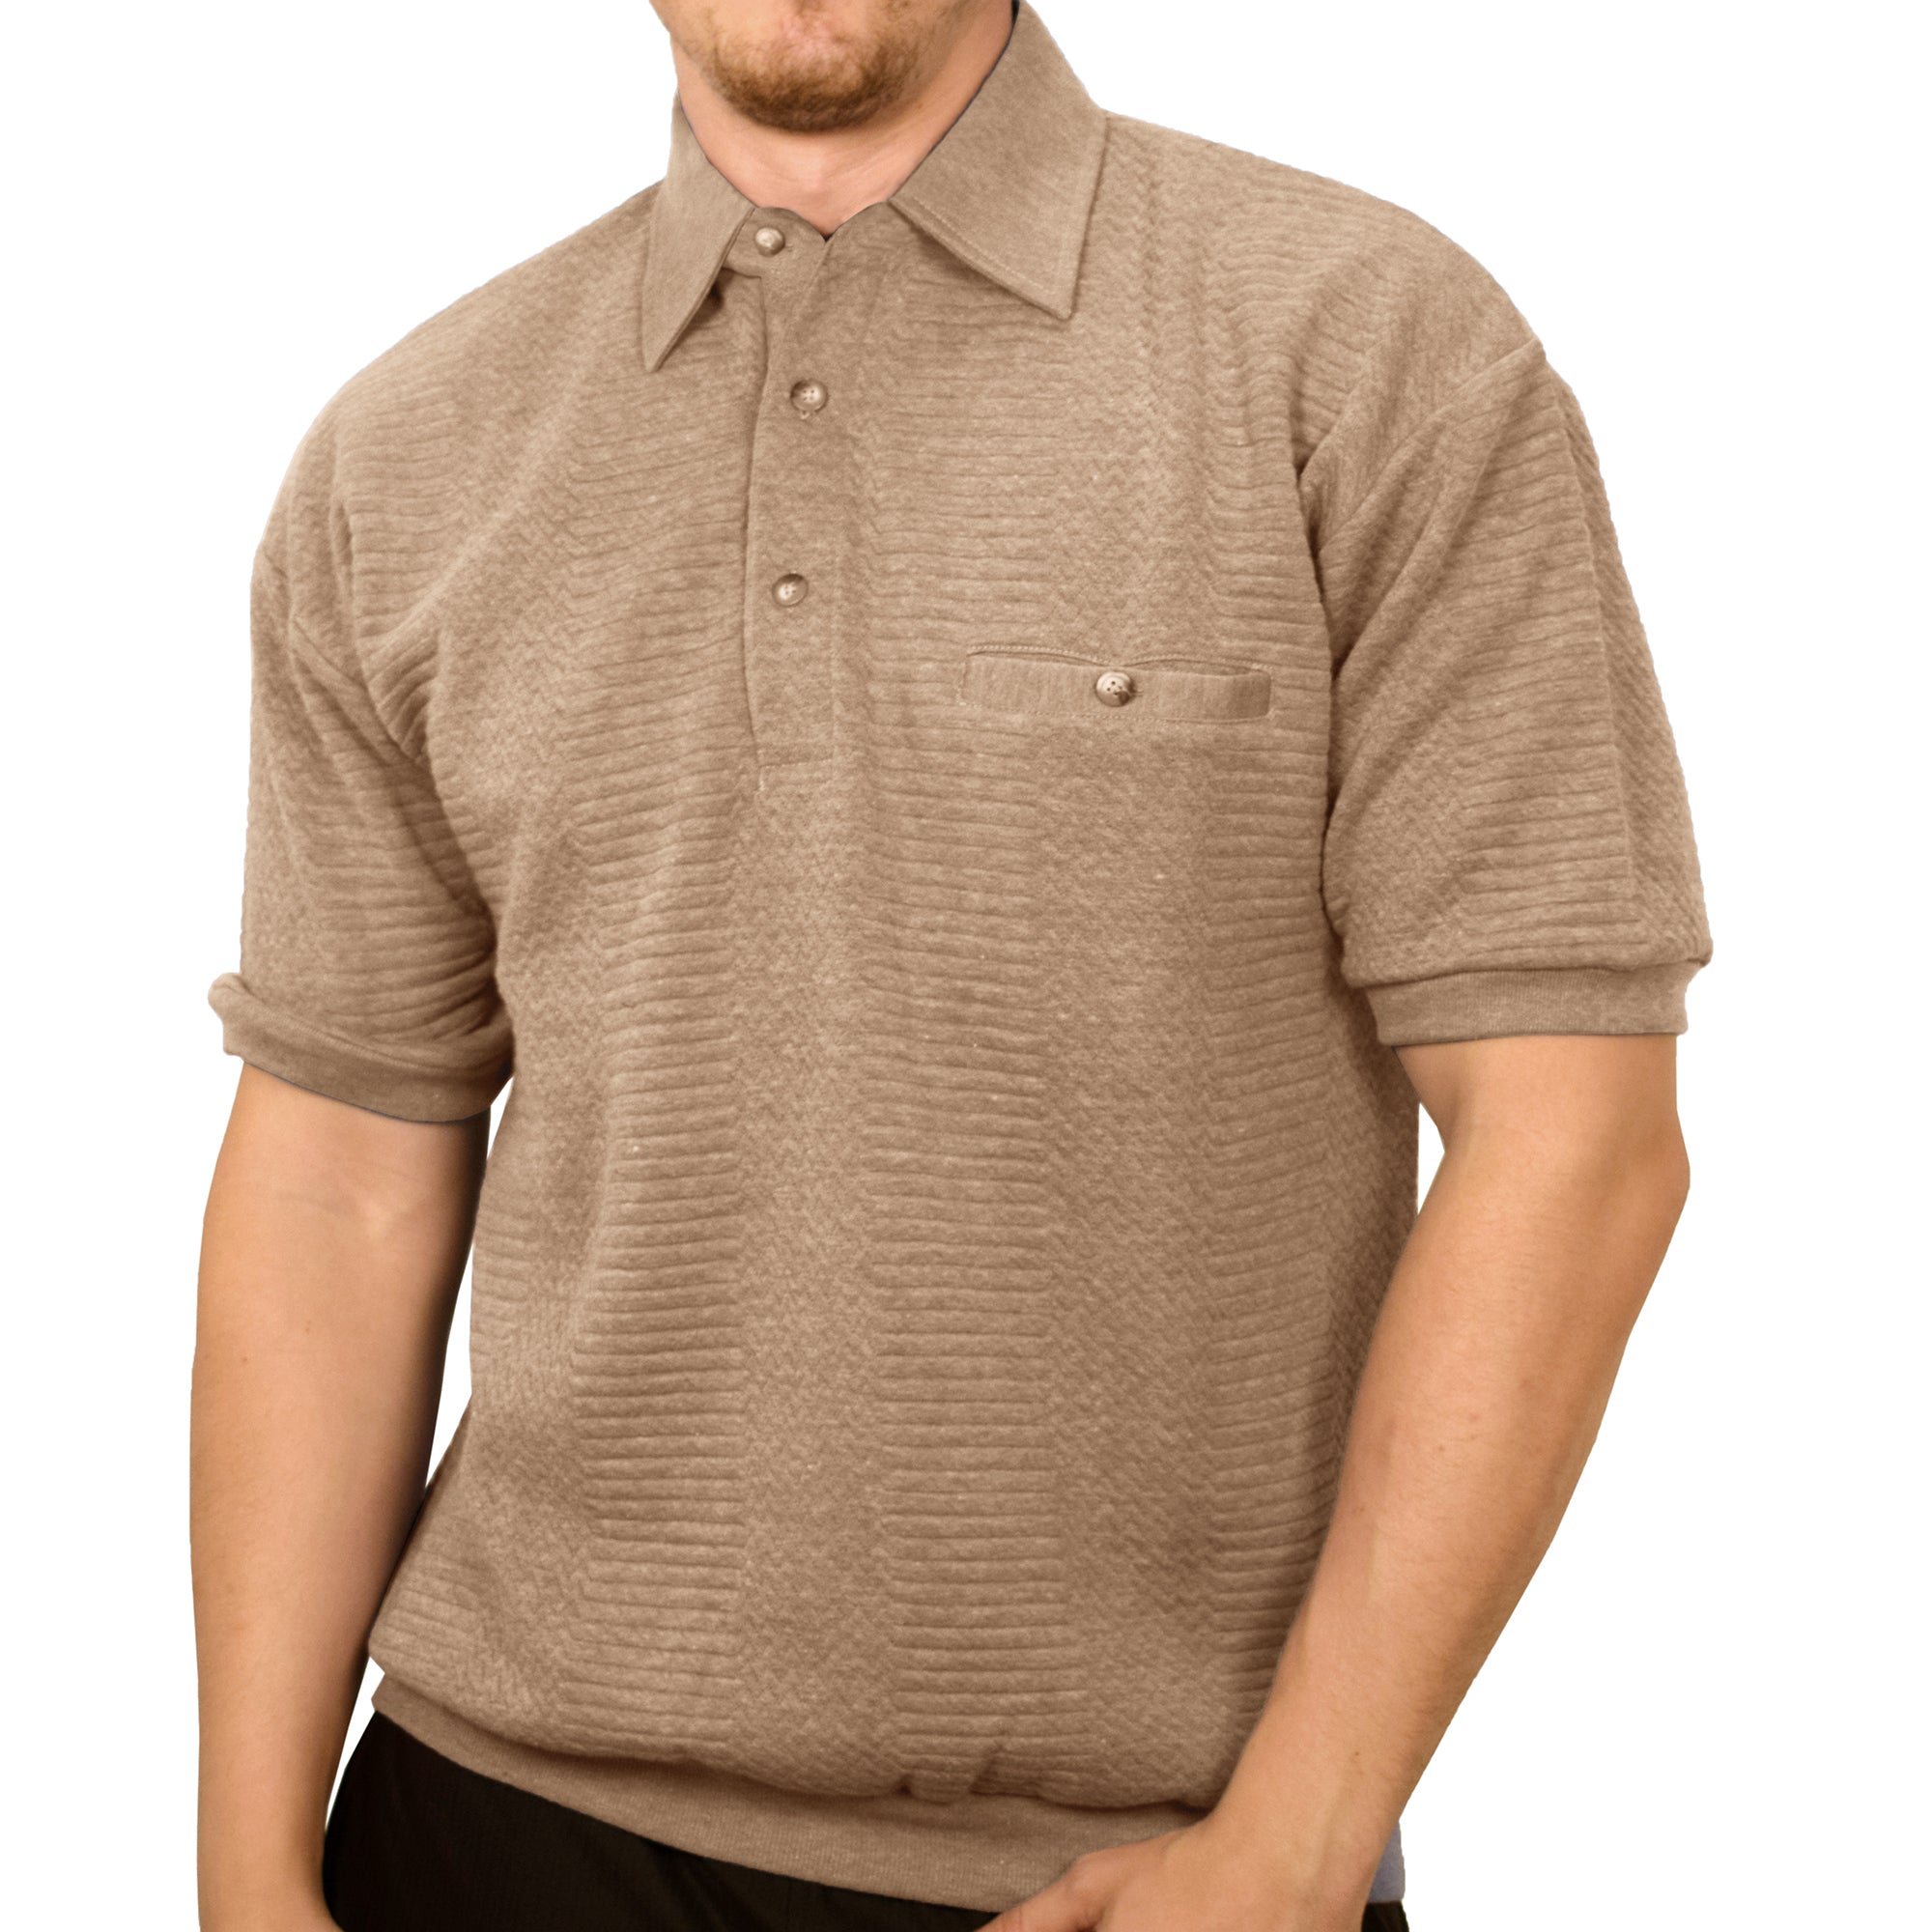 Palmland French Terry Banded Bottom Shirt with Pocket – bandedbottom